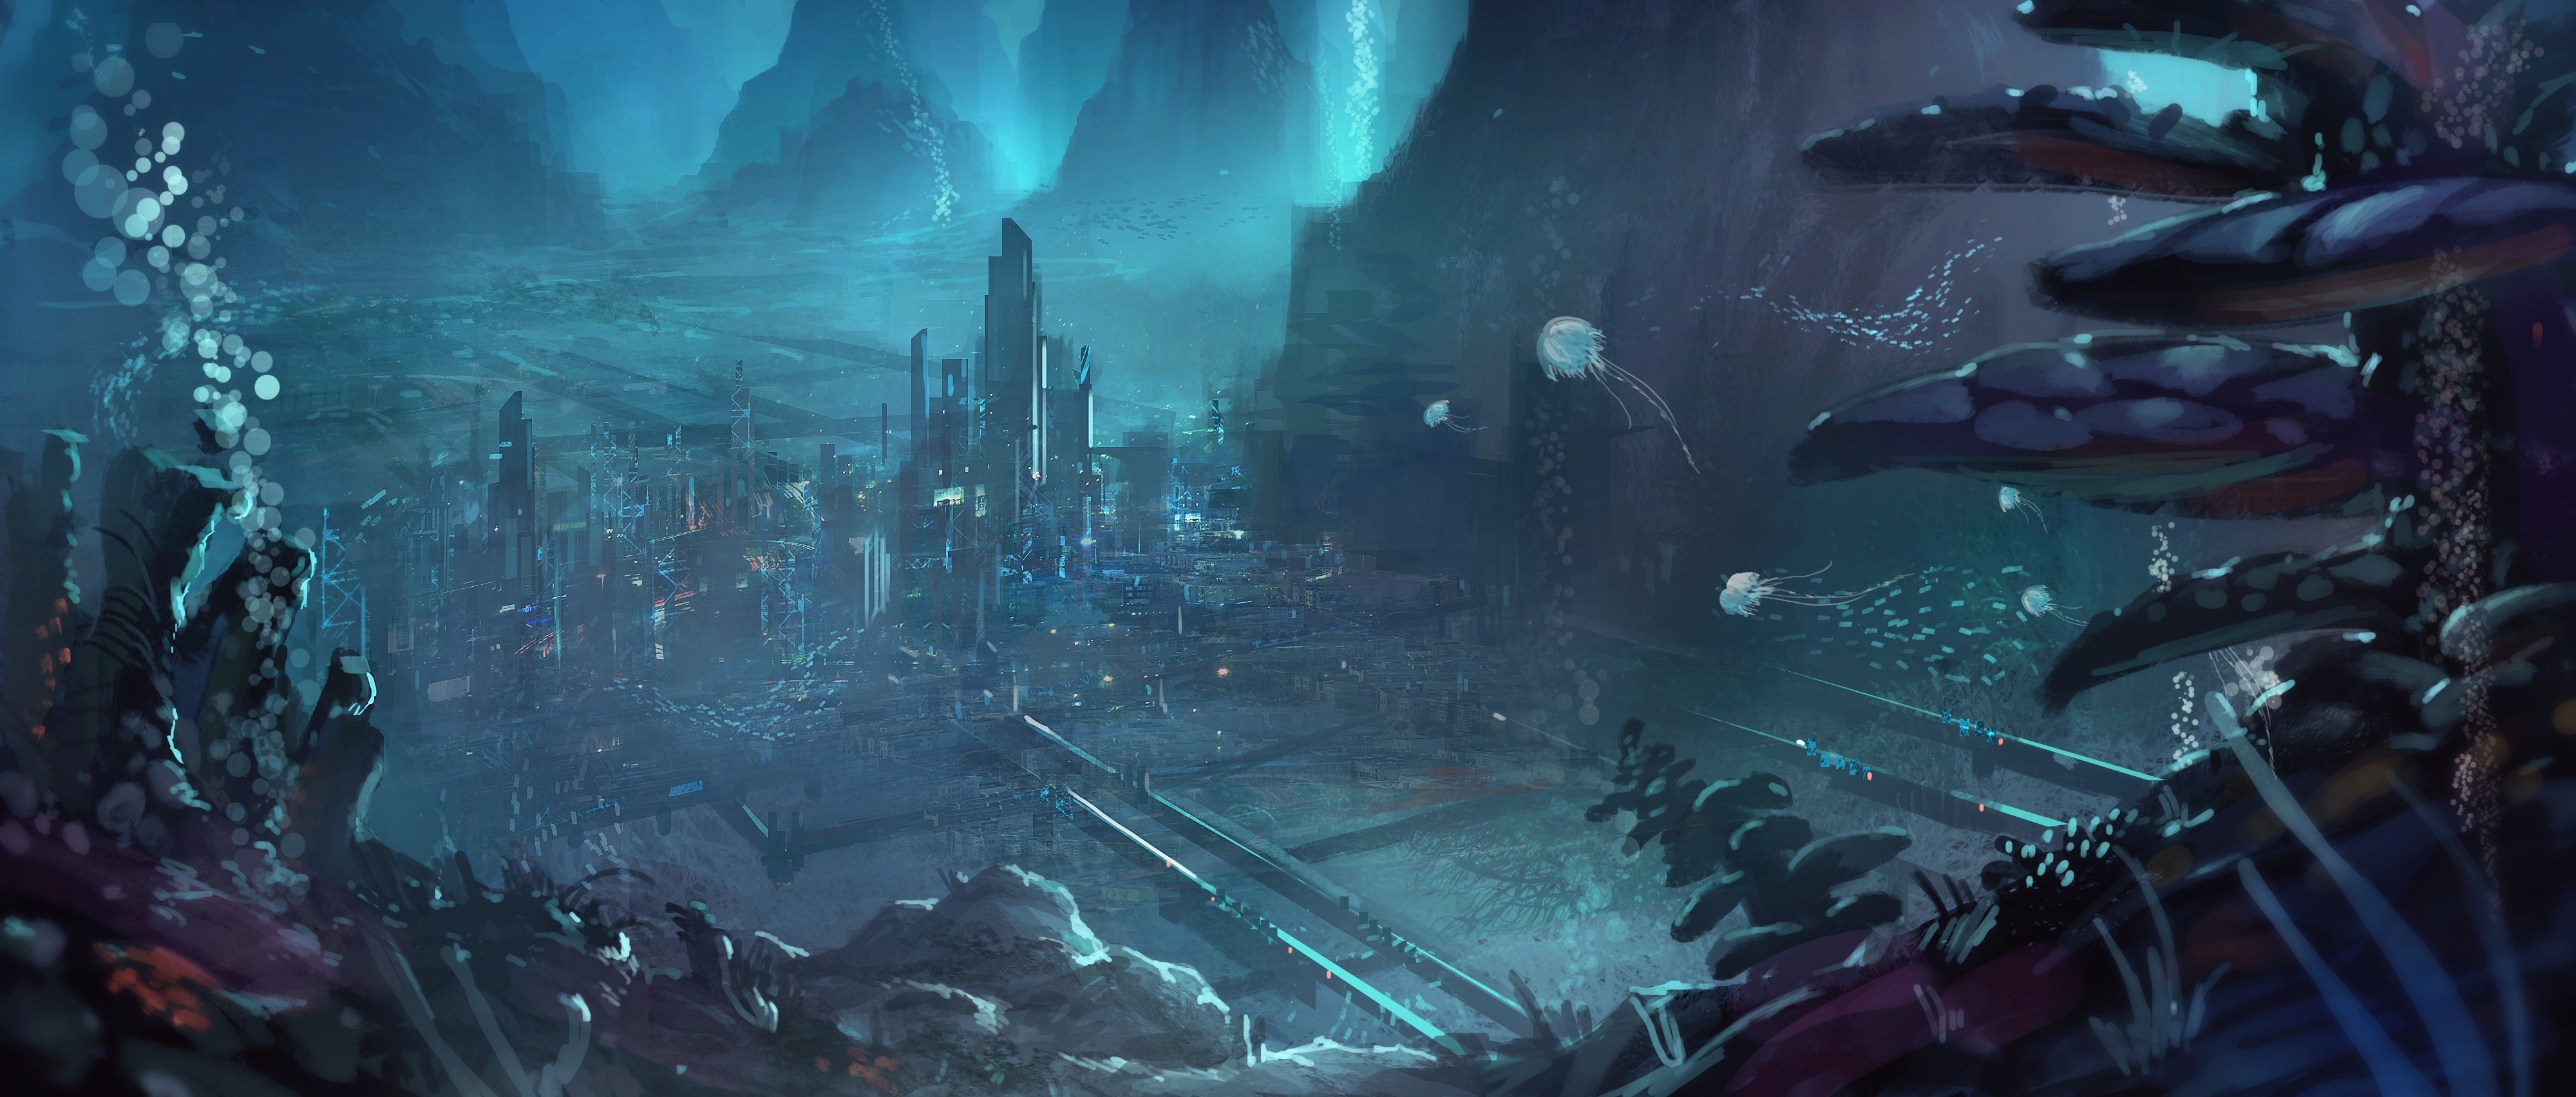 Cyberpunk Underwater City , HD Wallpaper & Backgrounds